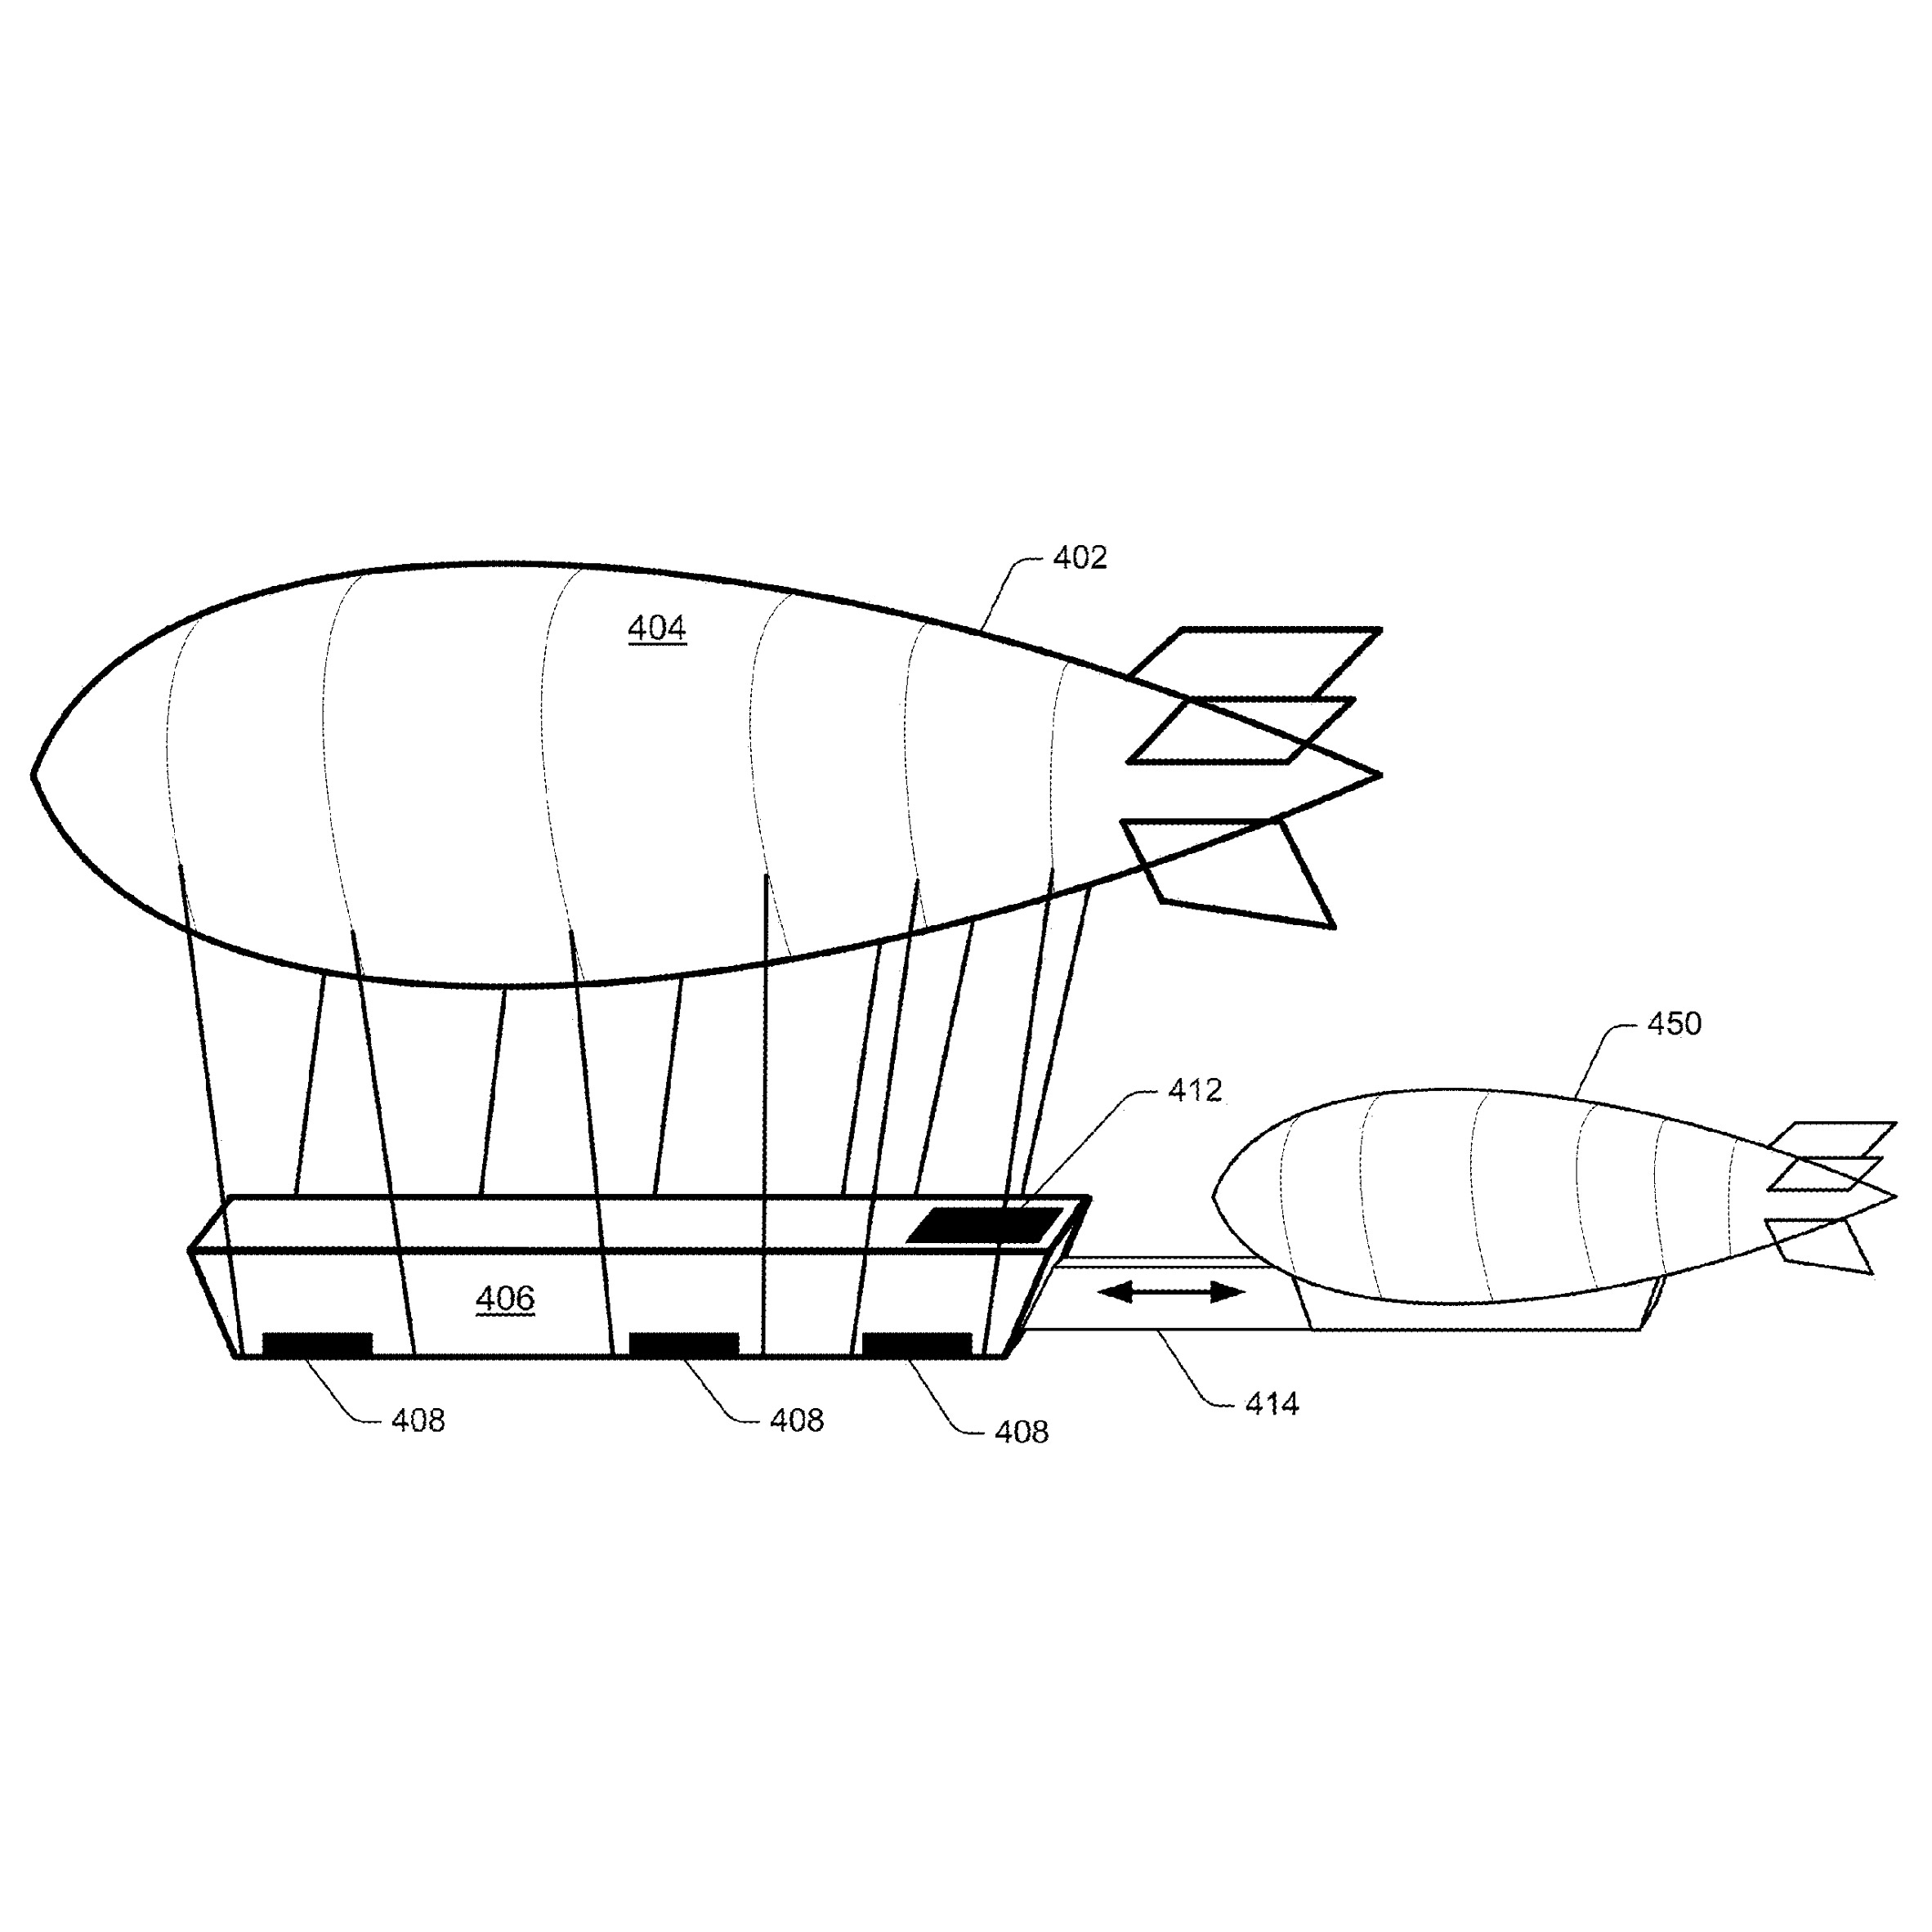 amazon drone airship